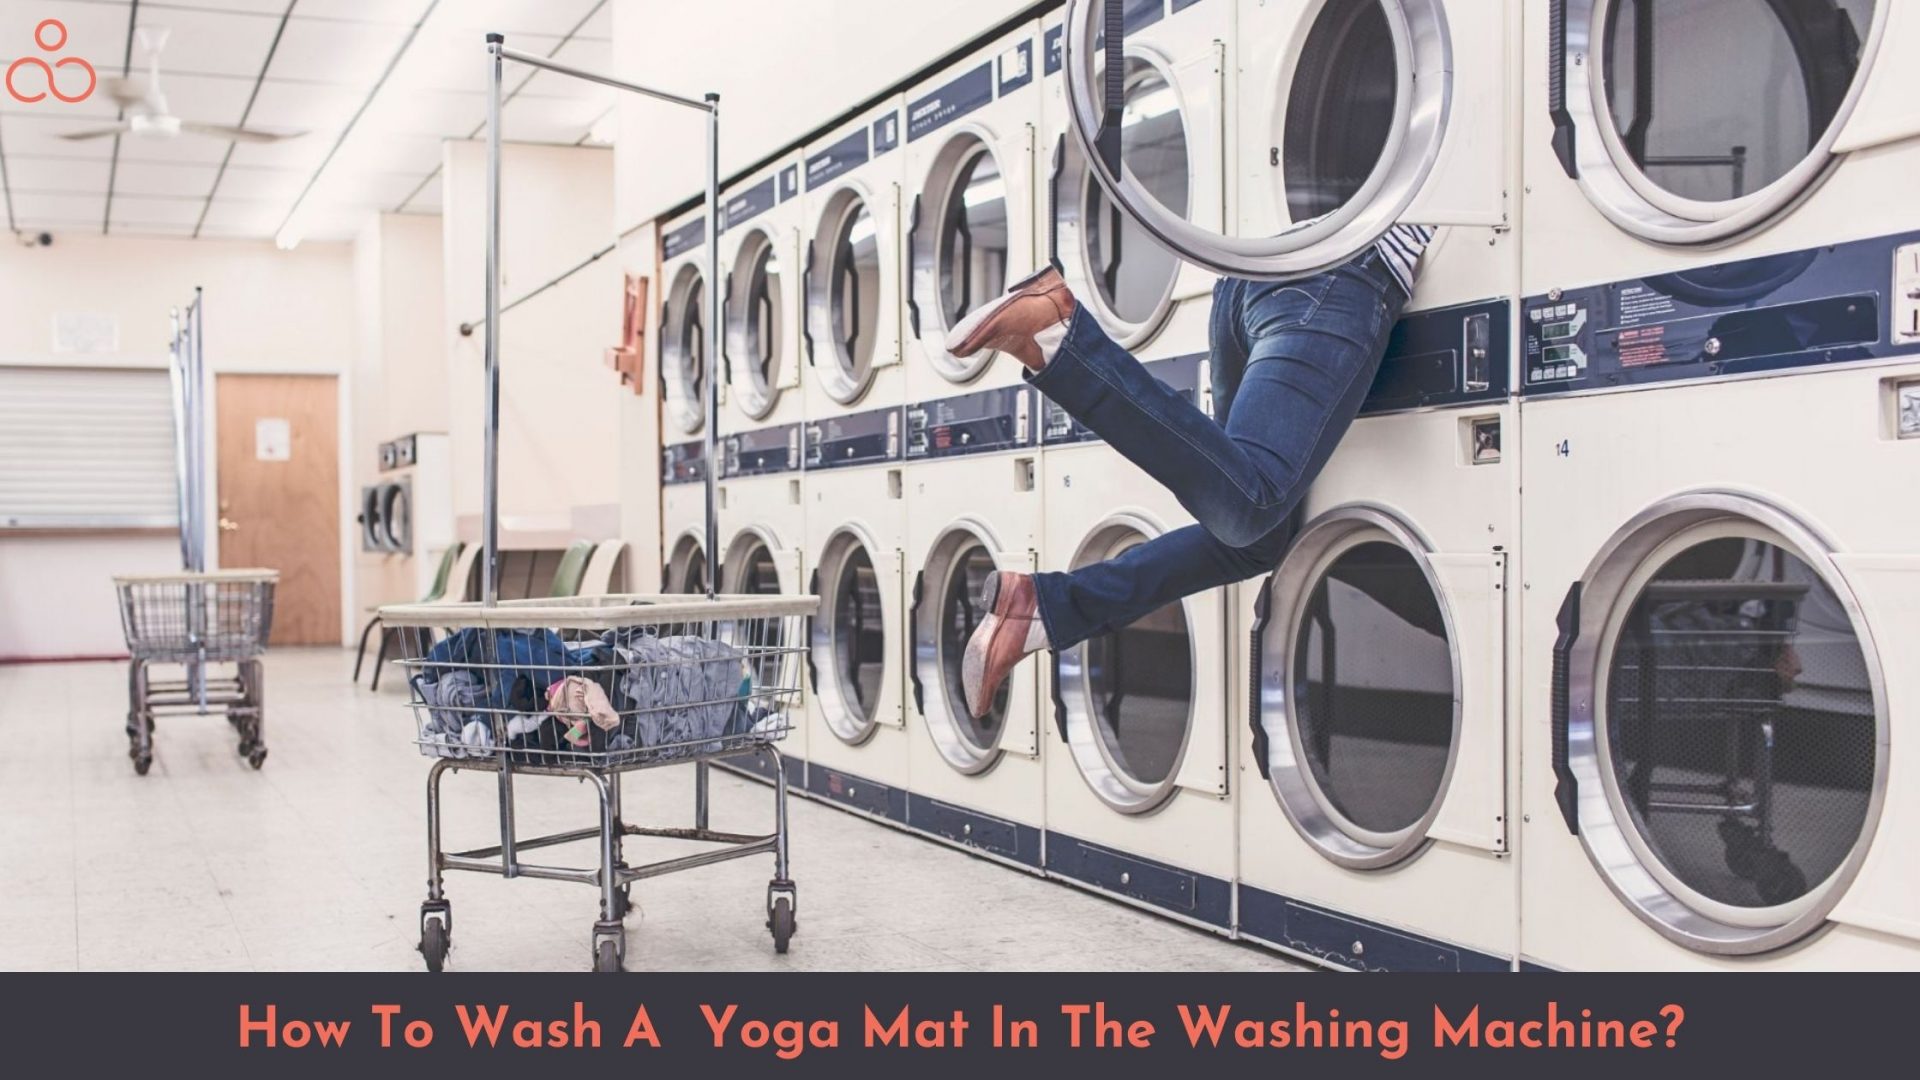 Can You Put a Yoga Mat in the Washing Machine?